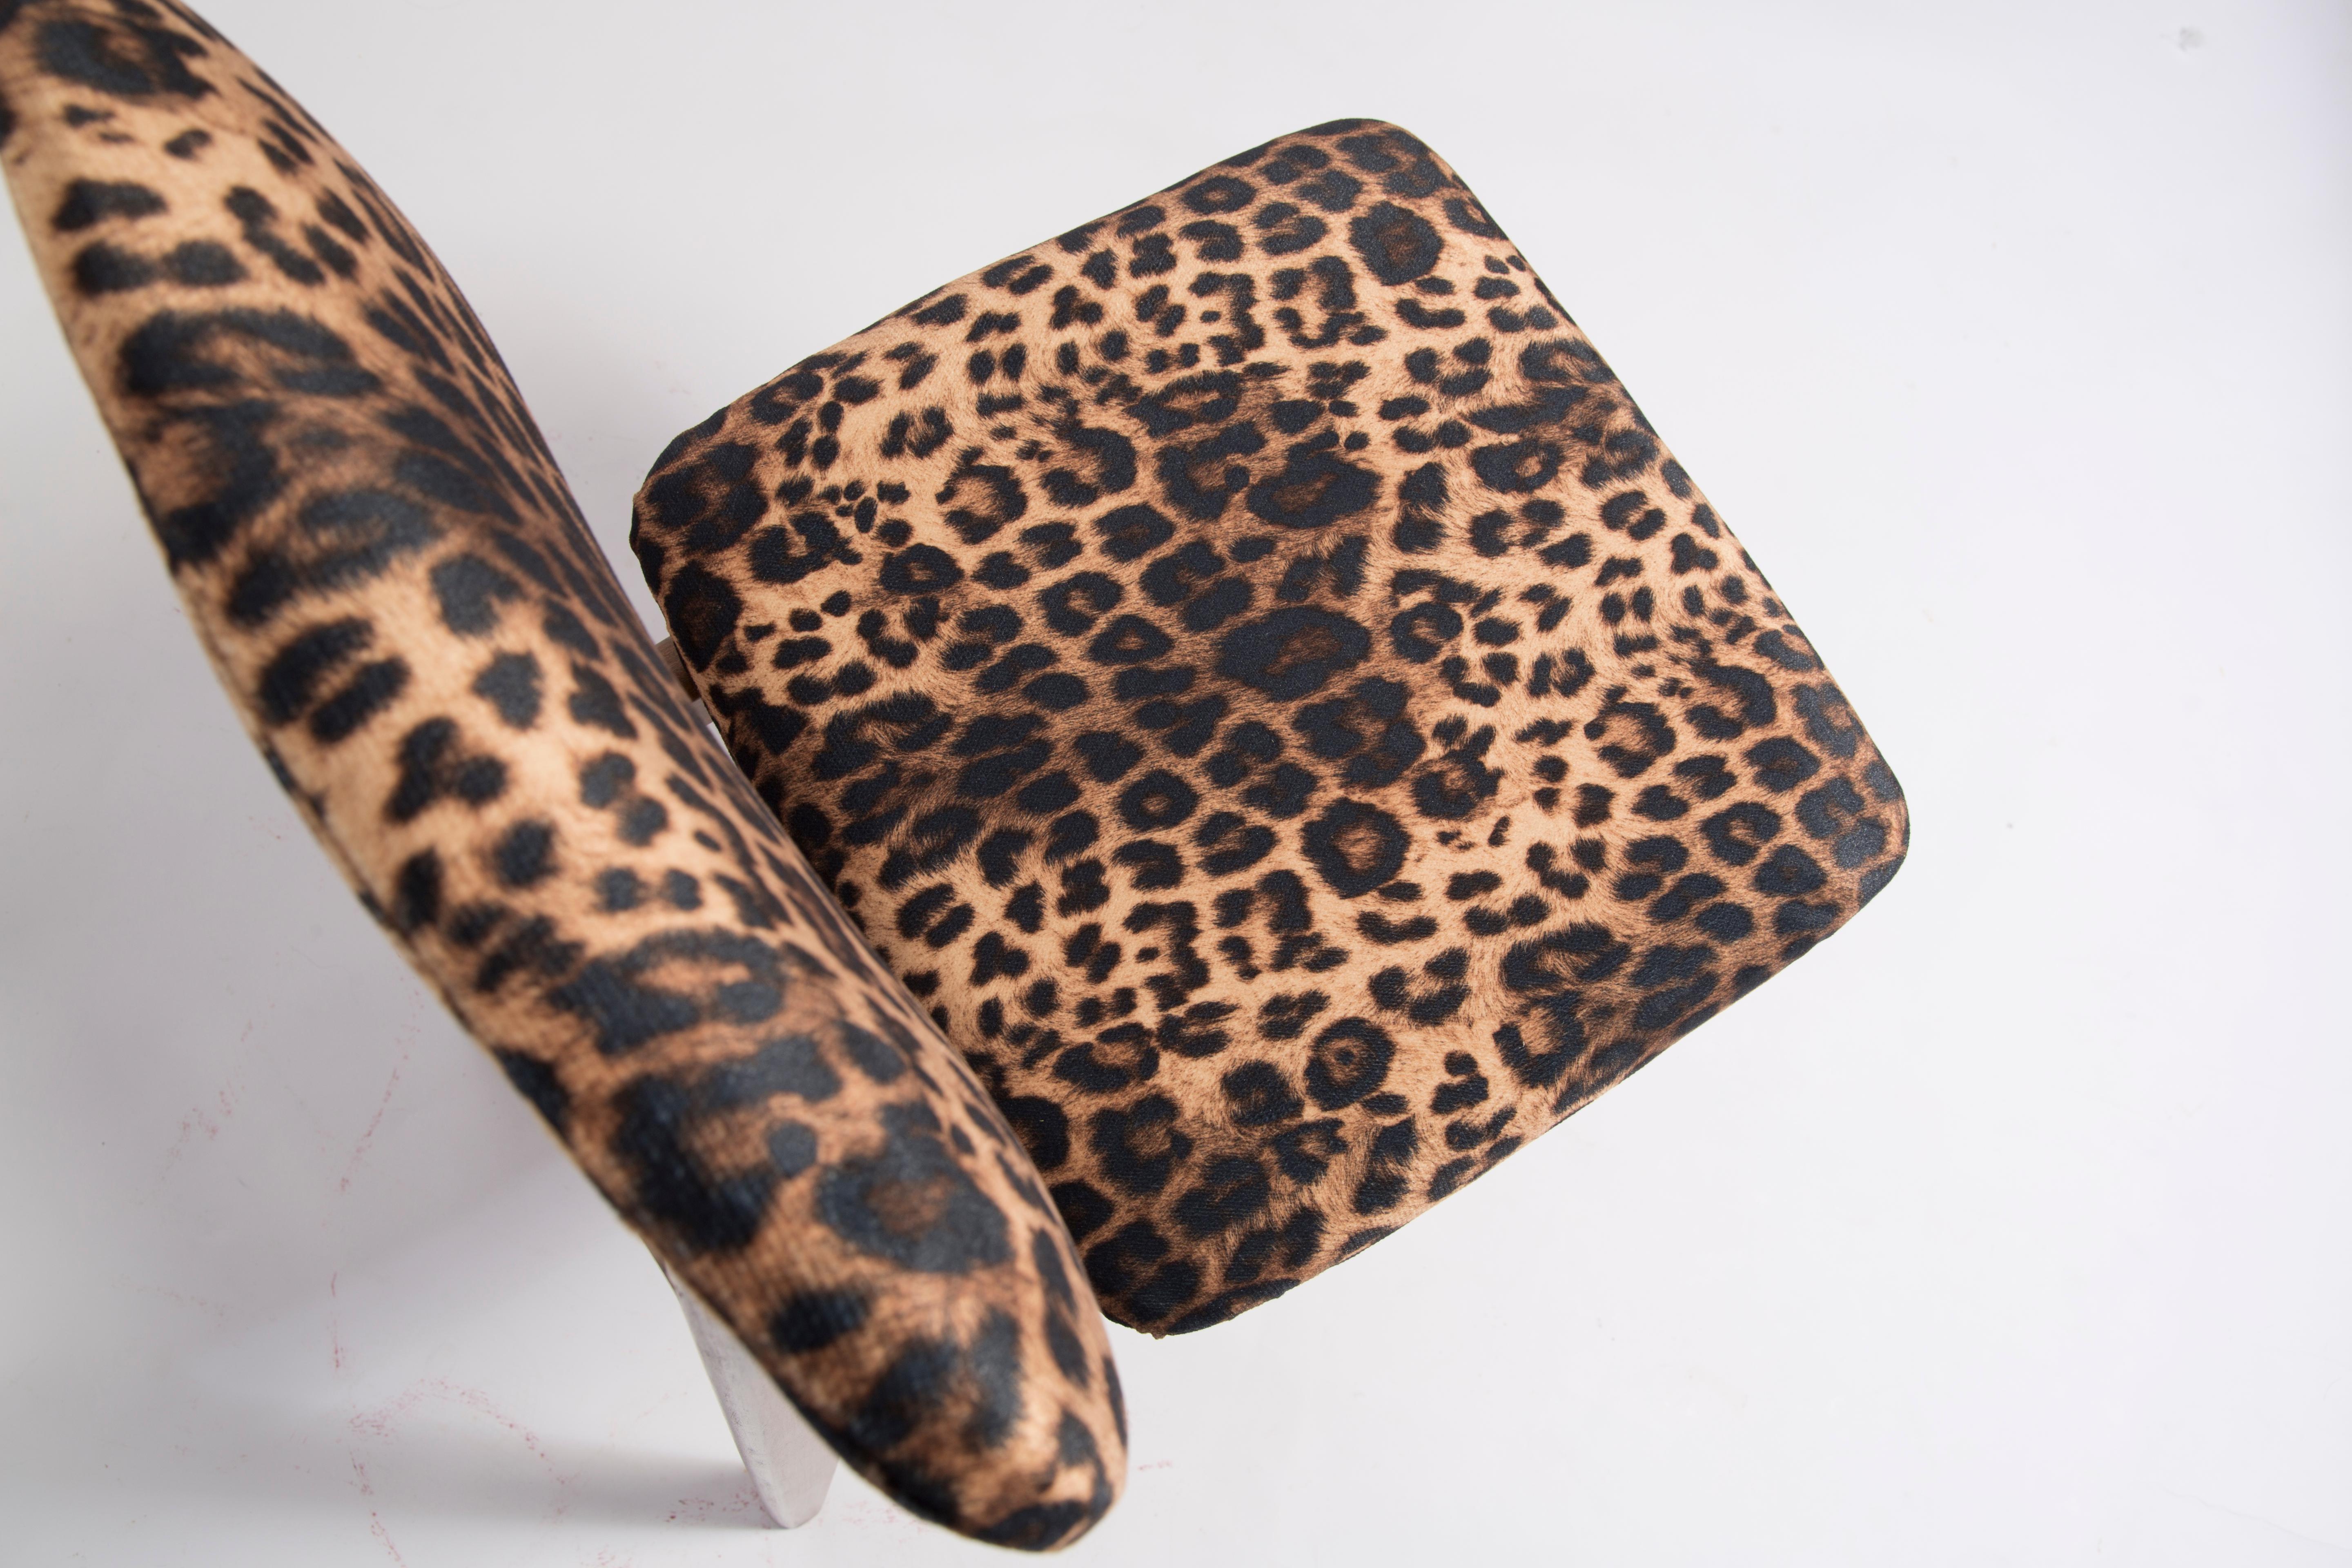 Mid Century Leopard Velvet Chair, Walnut Wood, Rajmund Halas, Poland, 1960s For Sale 1